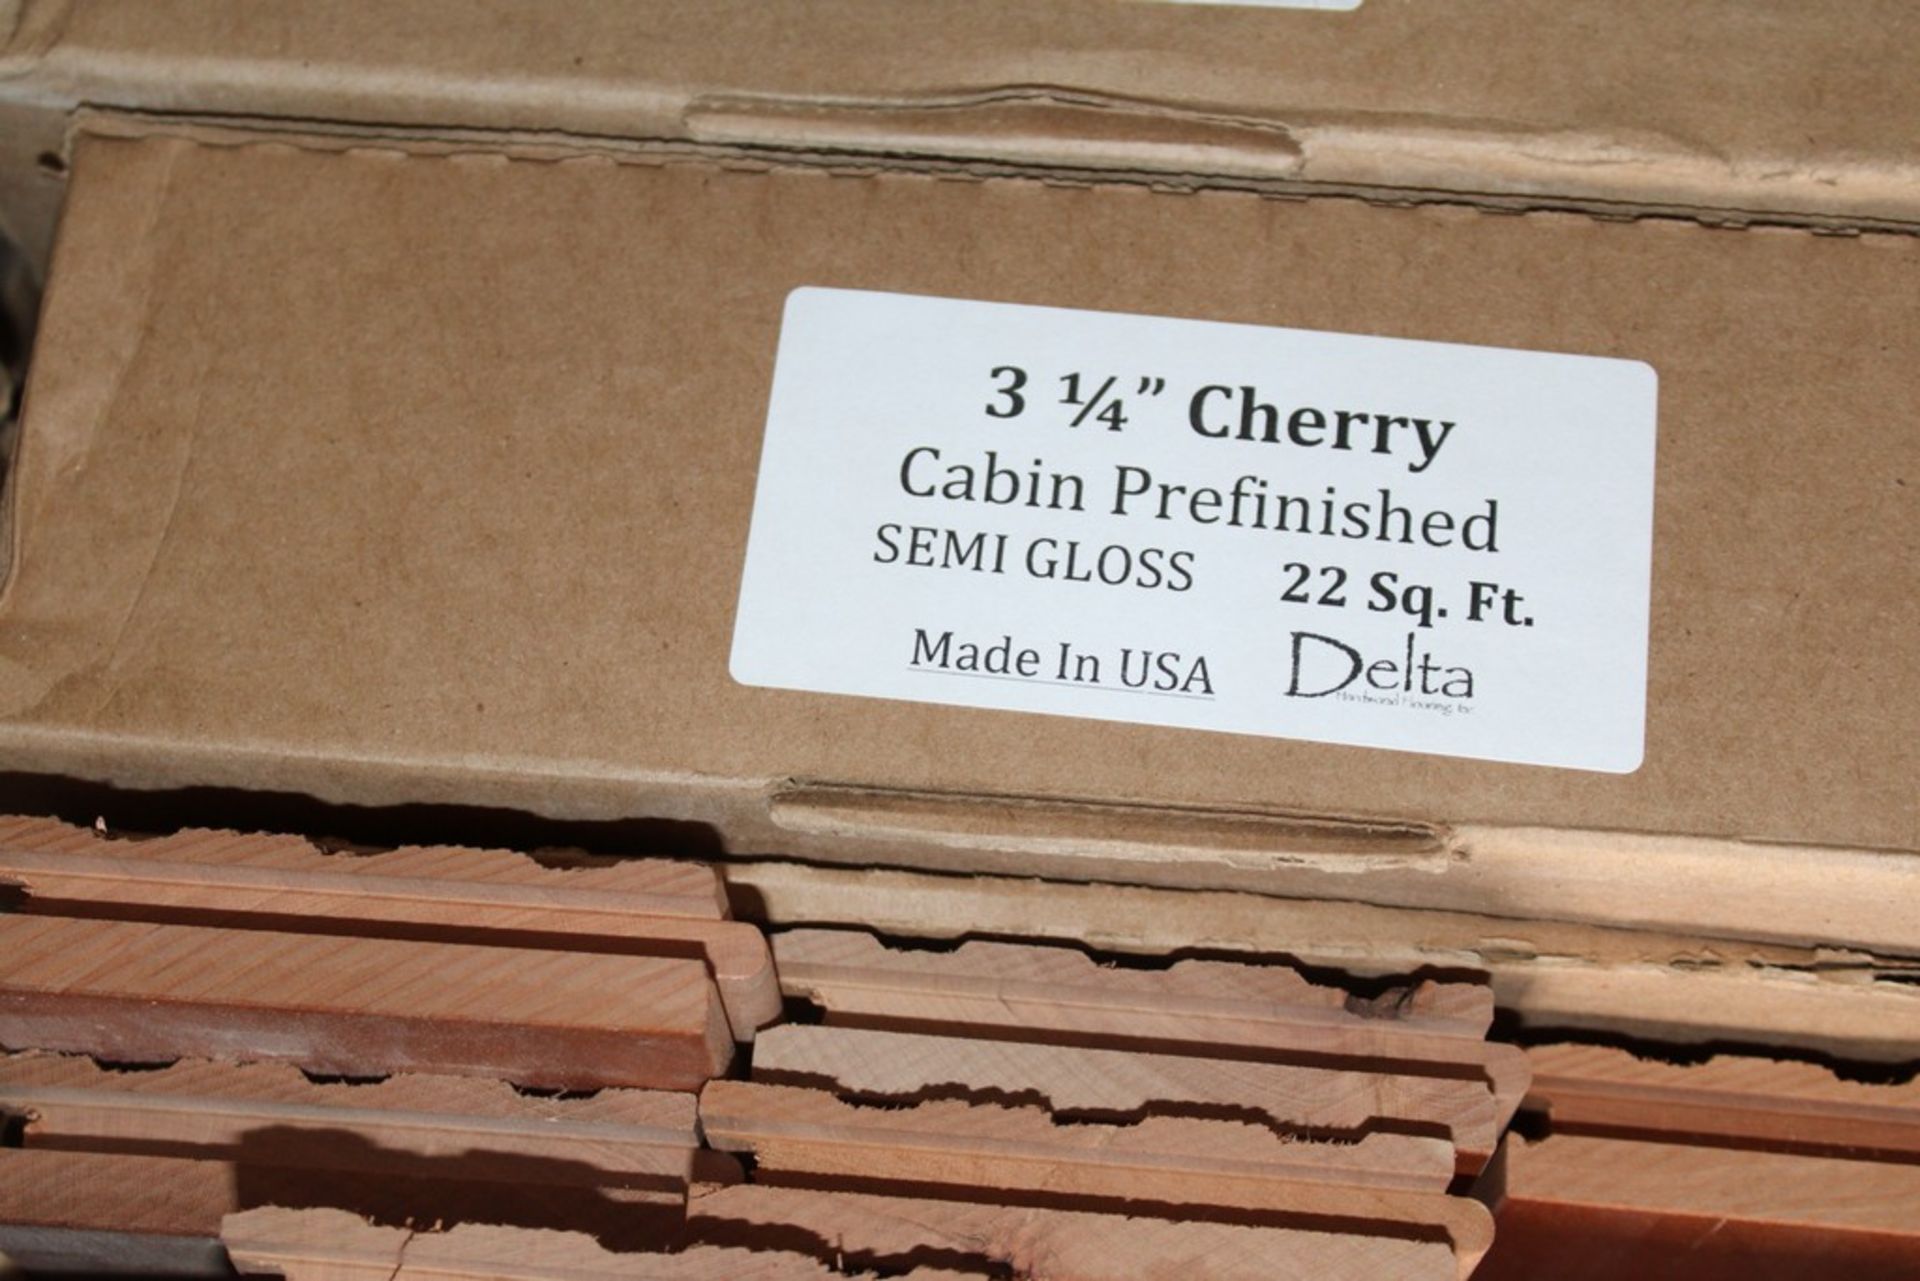 (37) BOXES OF 3-1/4" DELTA CHERRY, CABIN PREFINISHED FLOORING, 22 SQ. FT. PER BOX, SEMI-GLOSS - Image 2 of 2